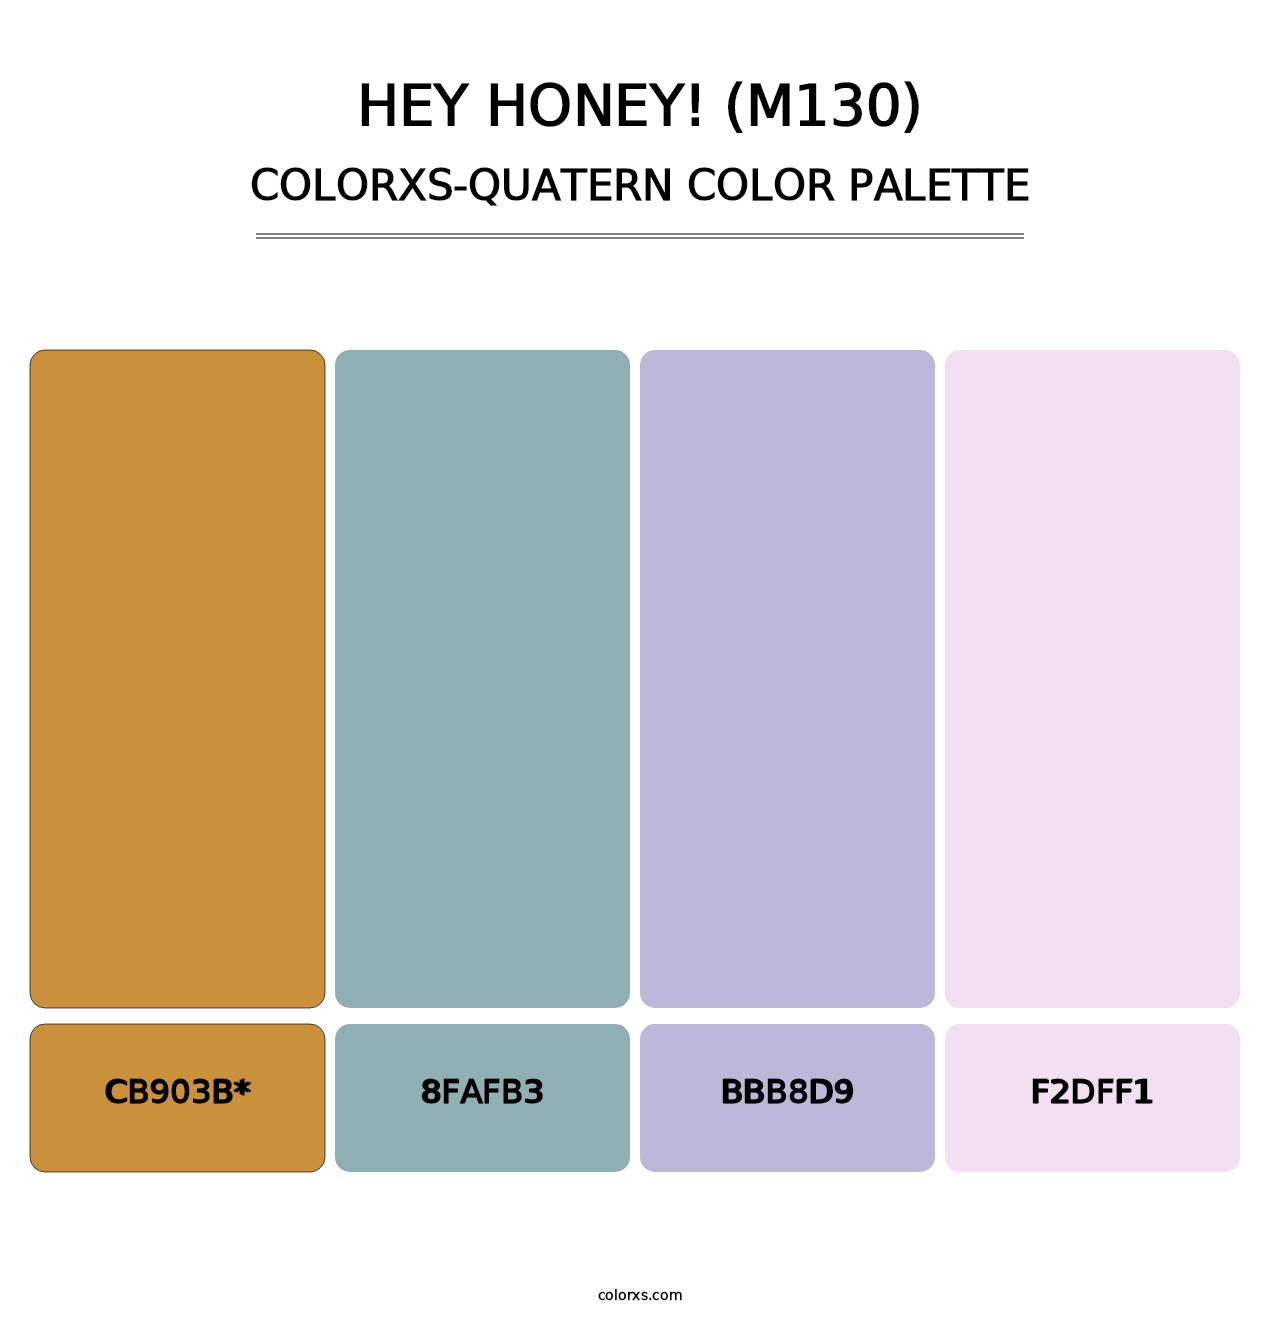 Hey Honey! (M130) - Colorxs Quatern Palette